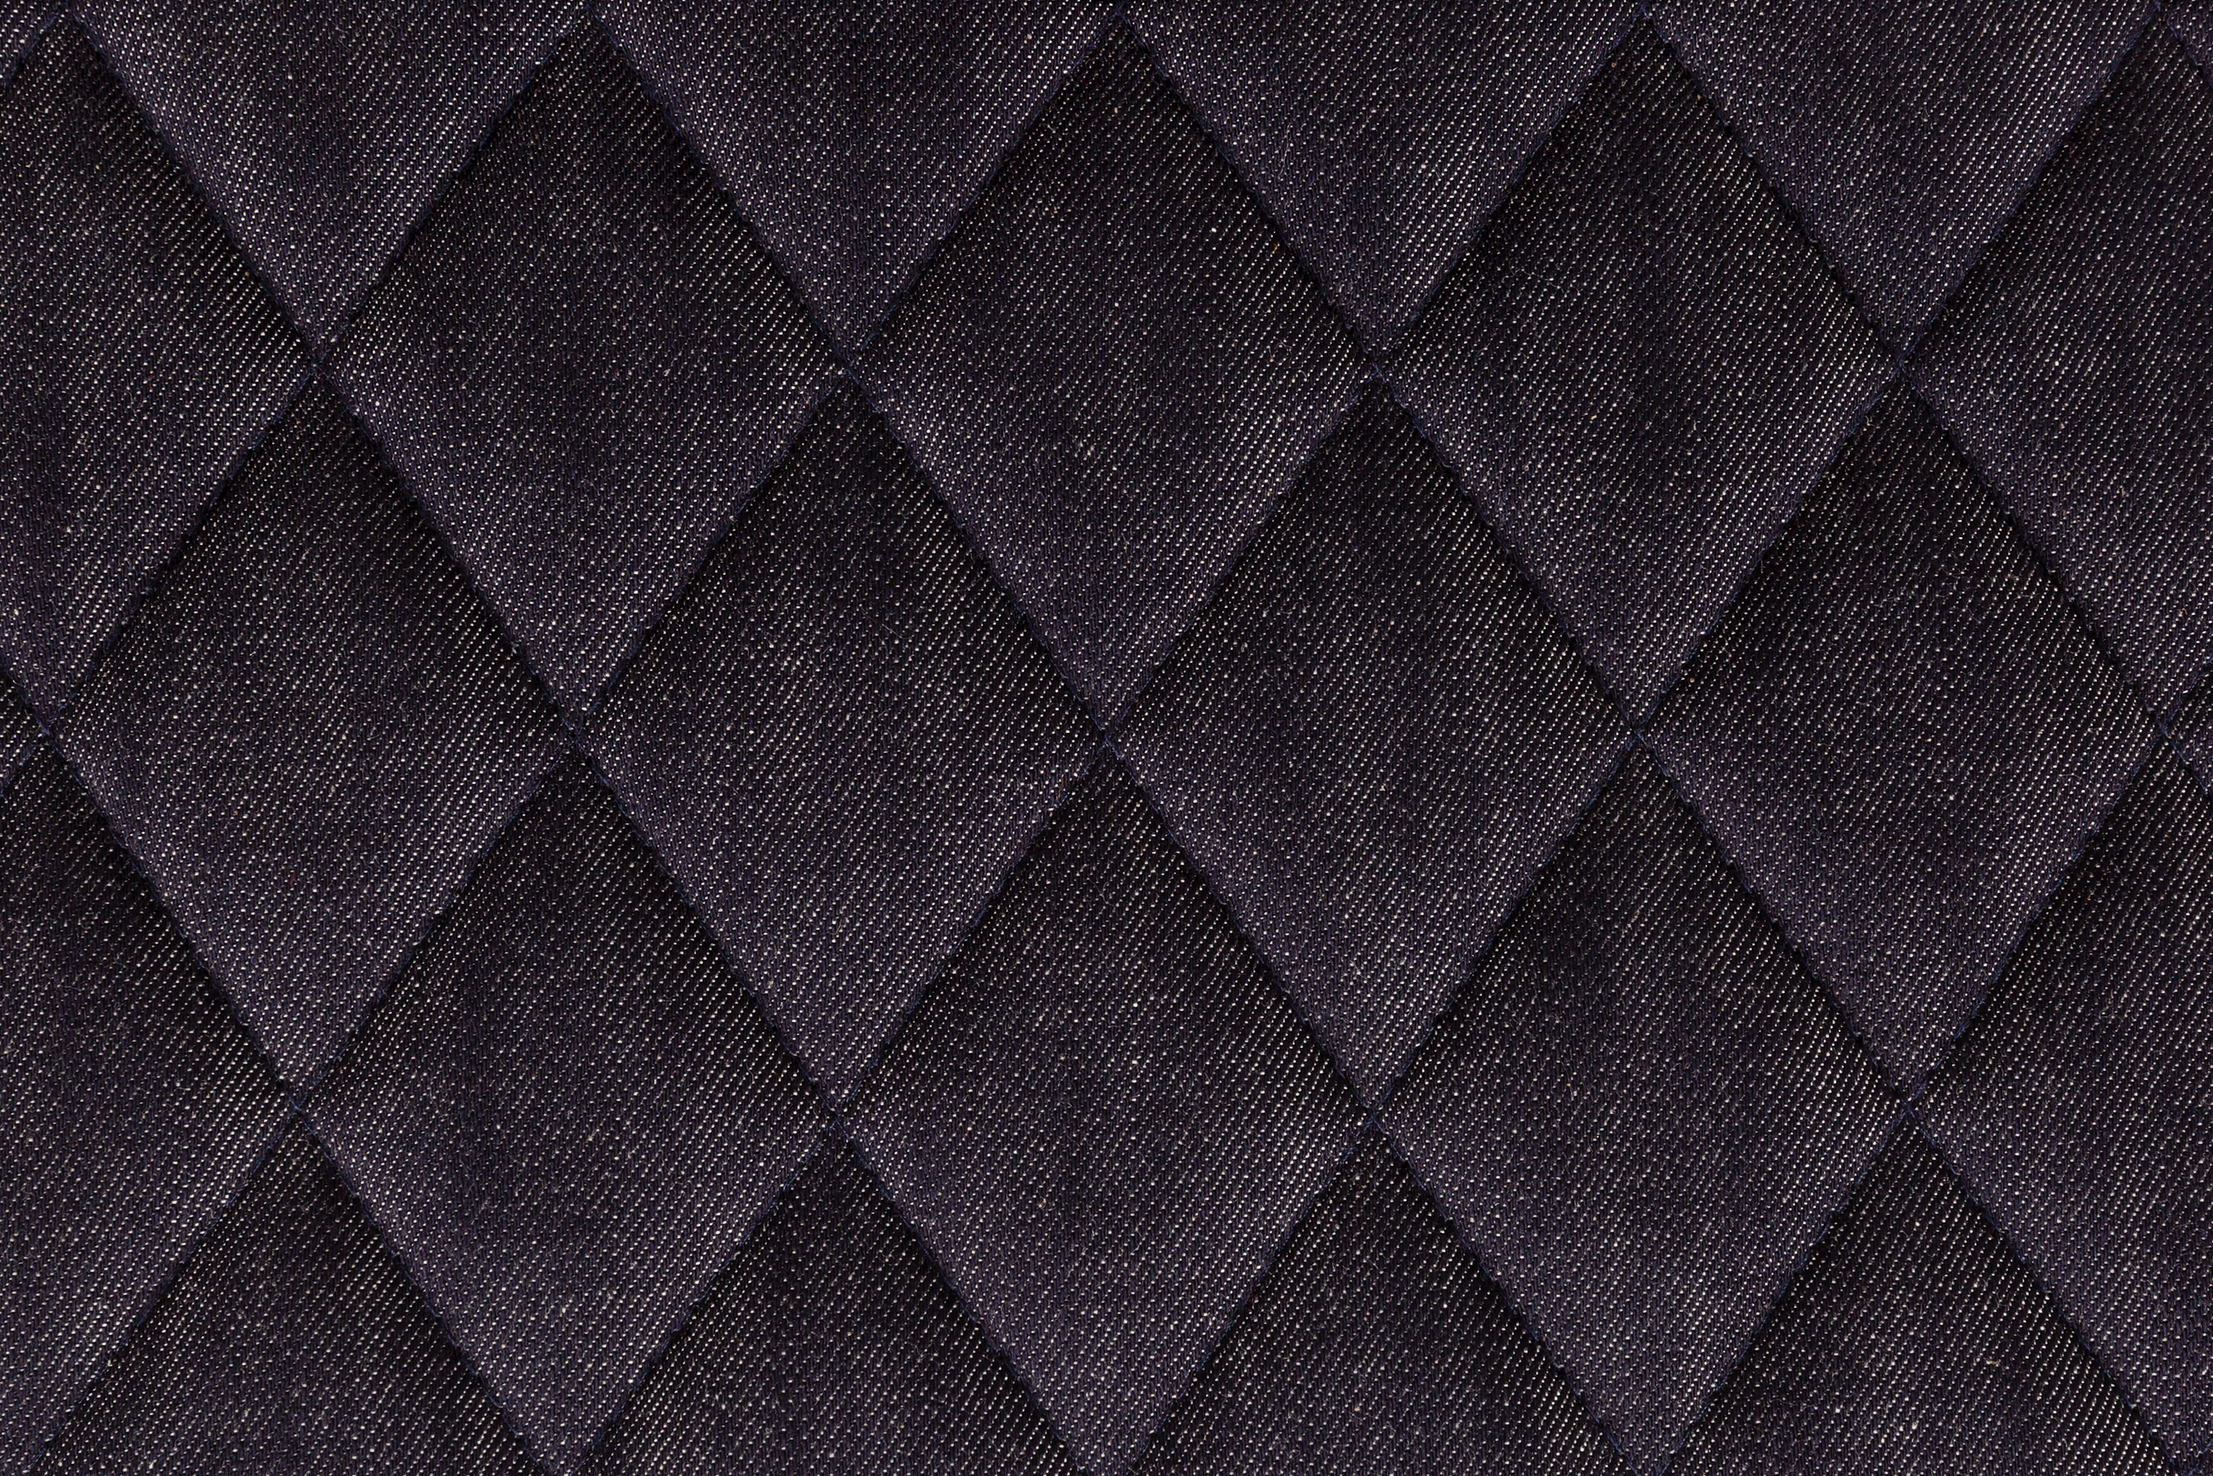 Fabric sample Midnight Denim grey